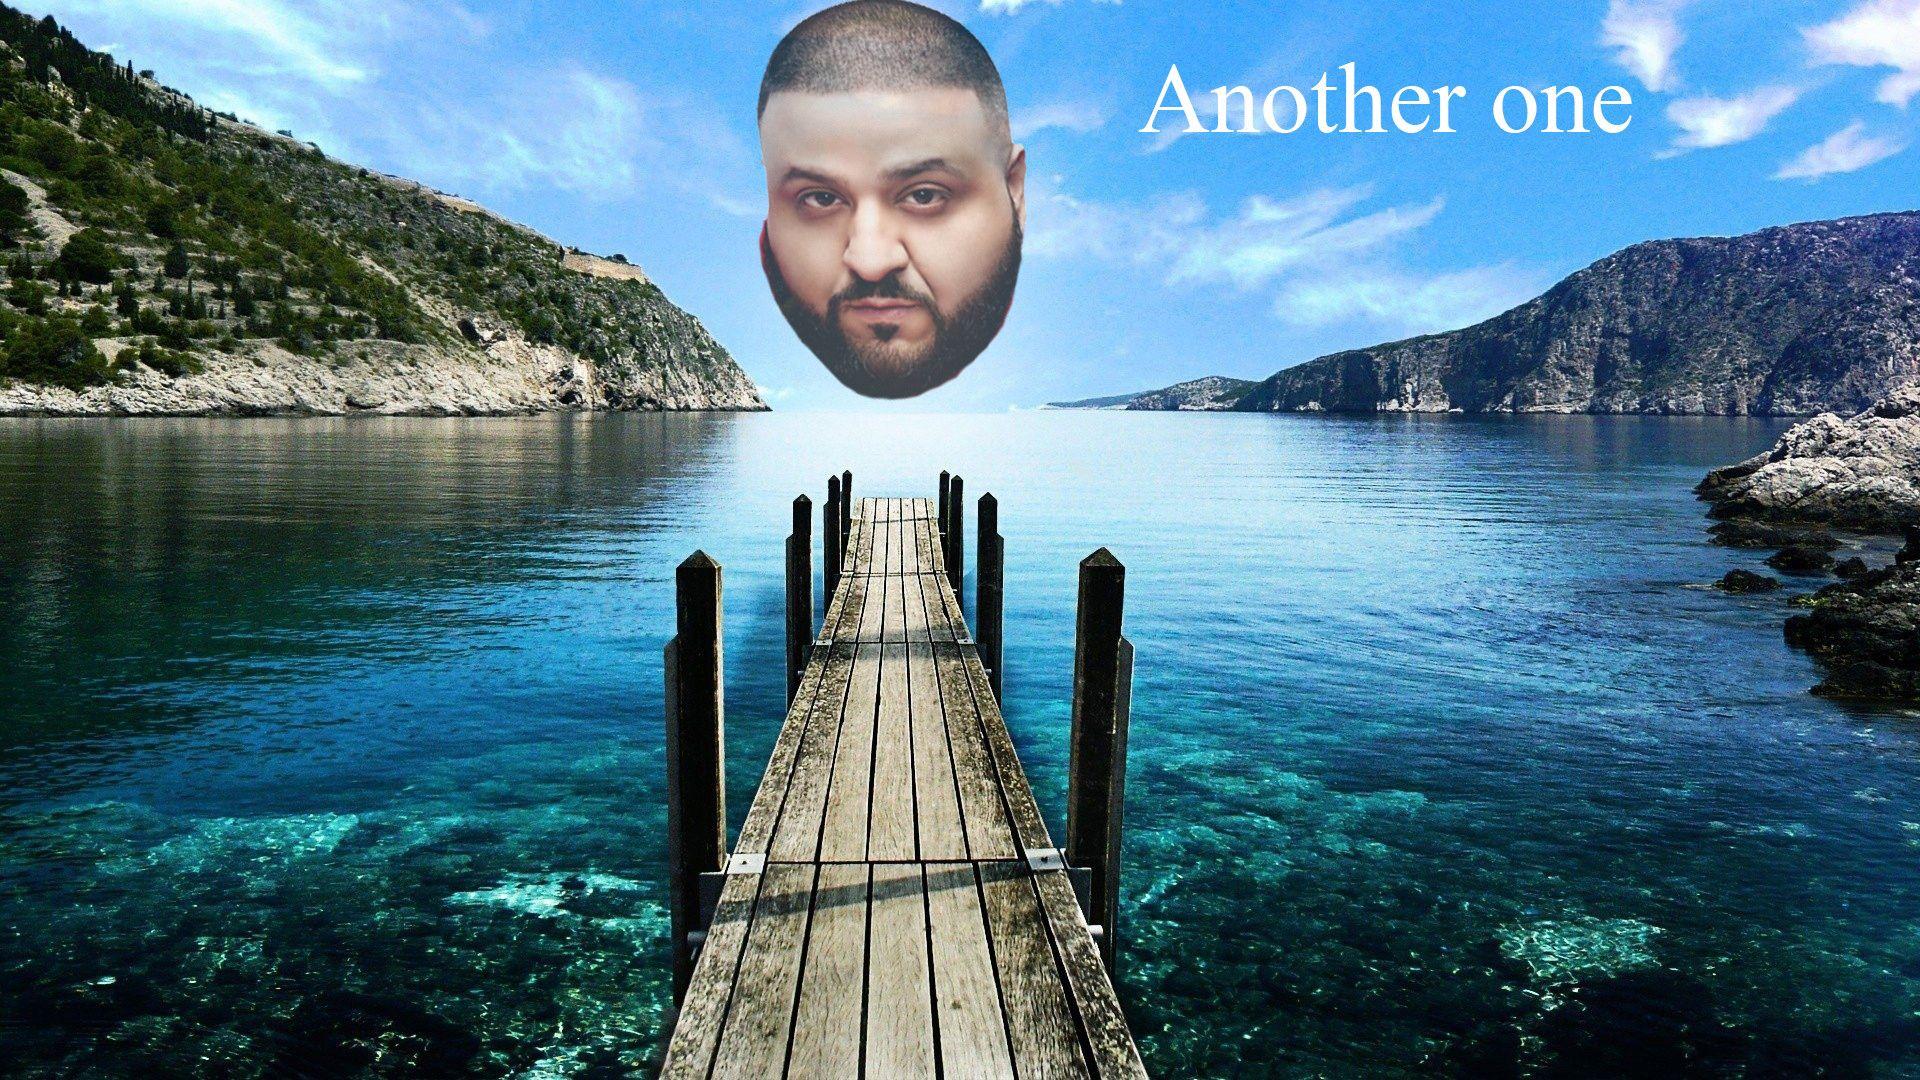 Here have 4 inspirational DJ Khaled wallpaper